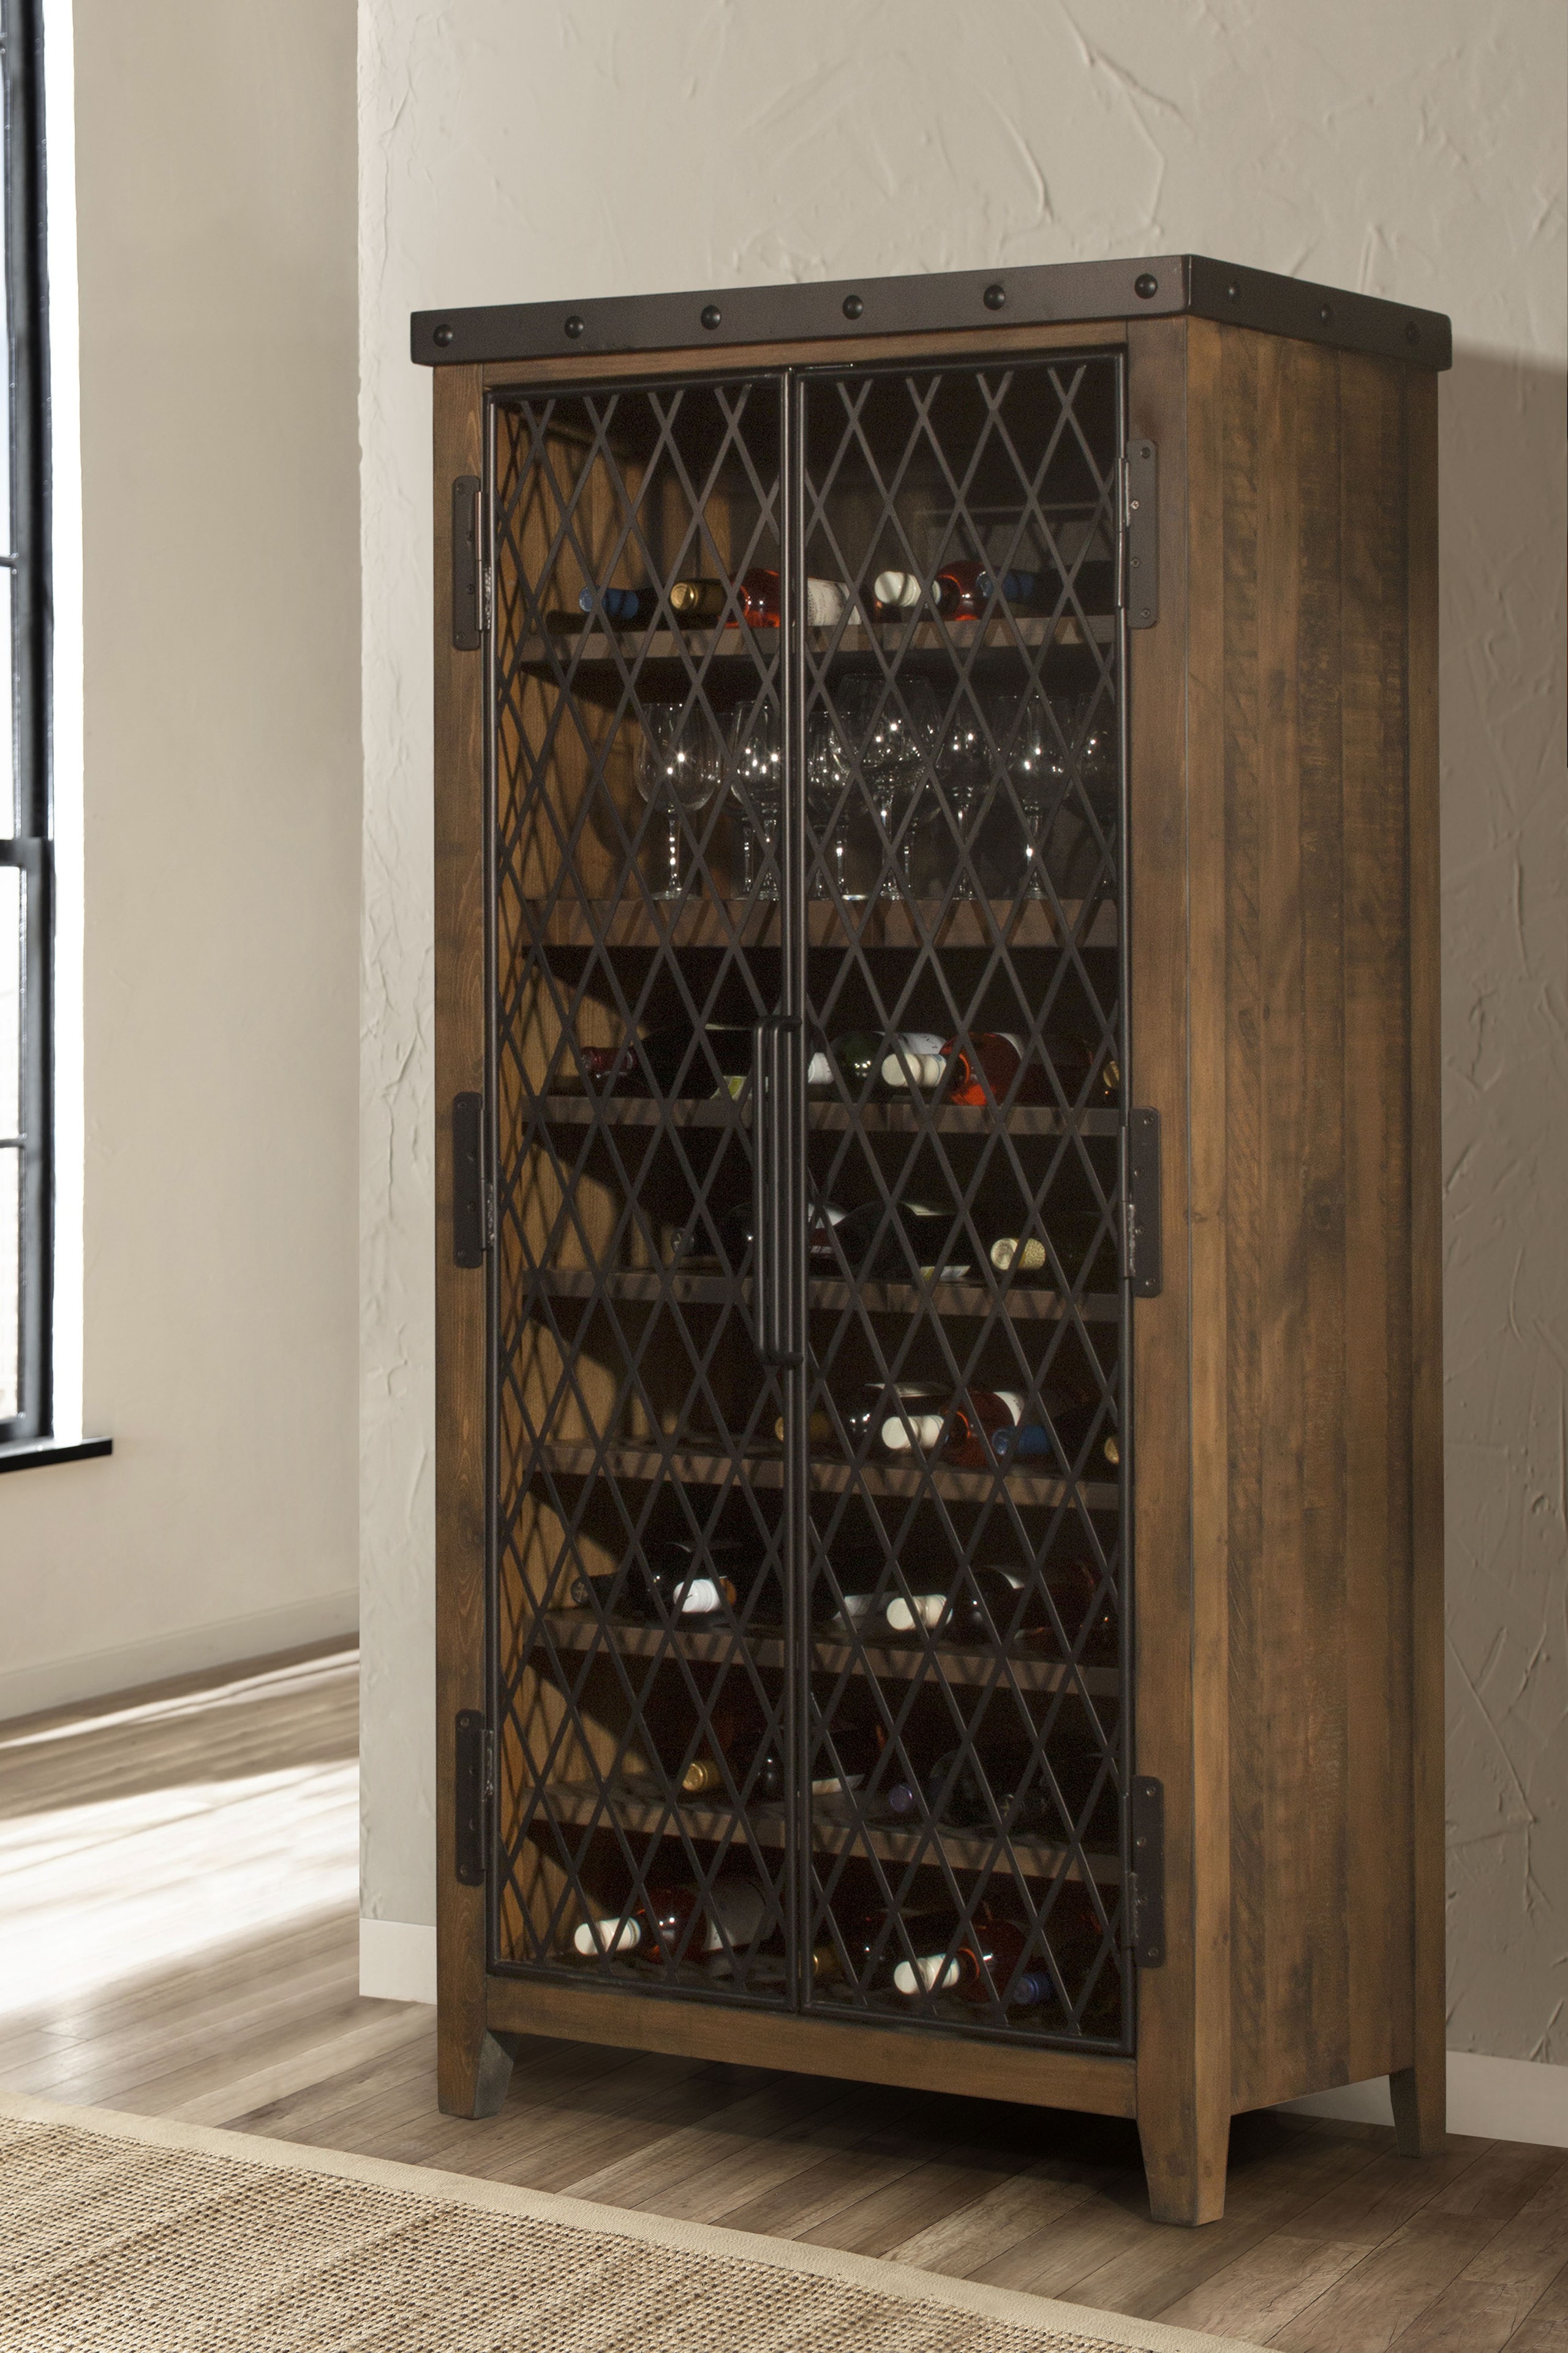 Hillsdale furniture jennings tall wine cabinet walmart